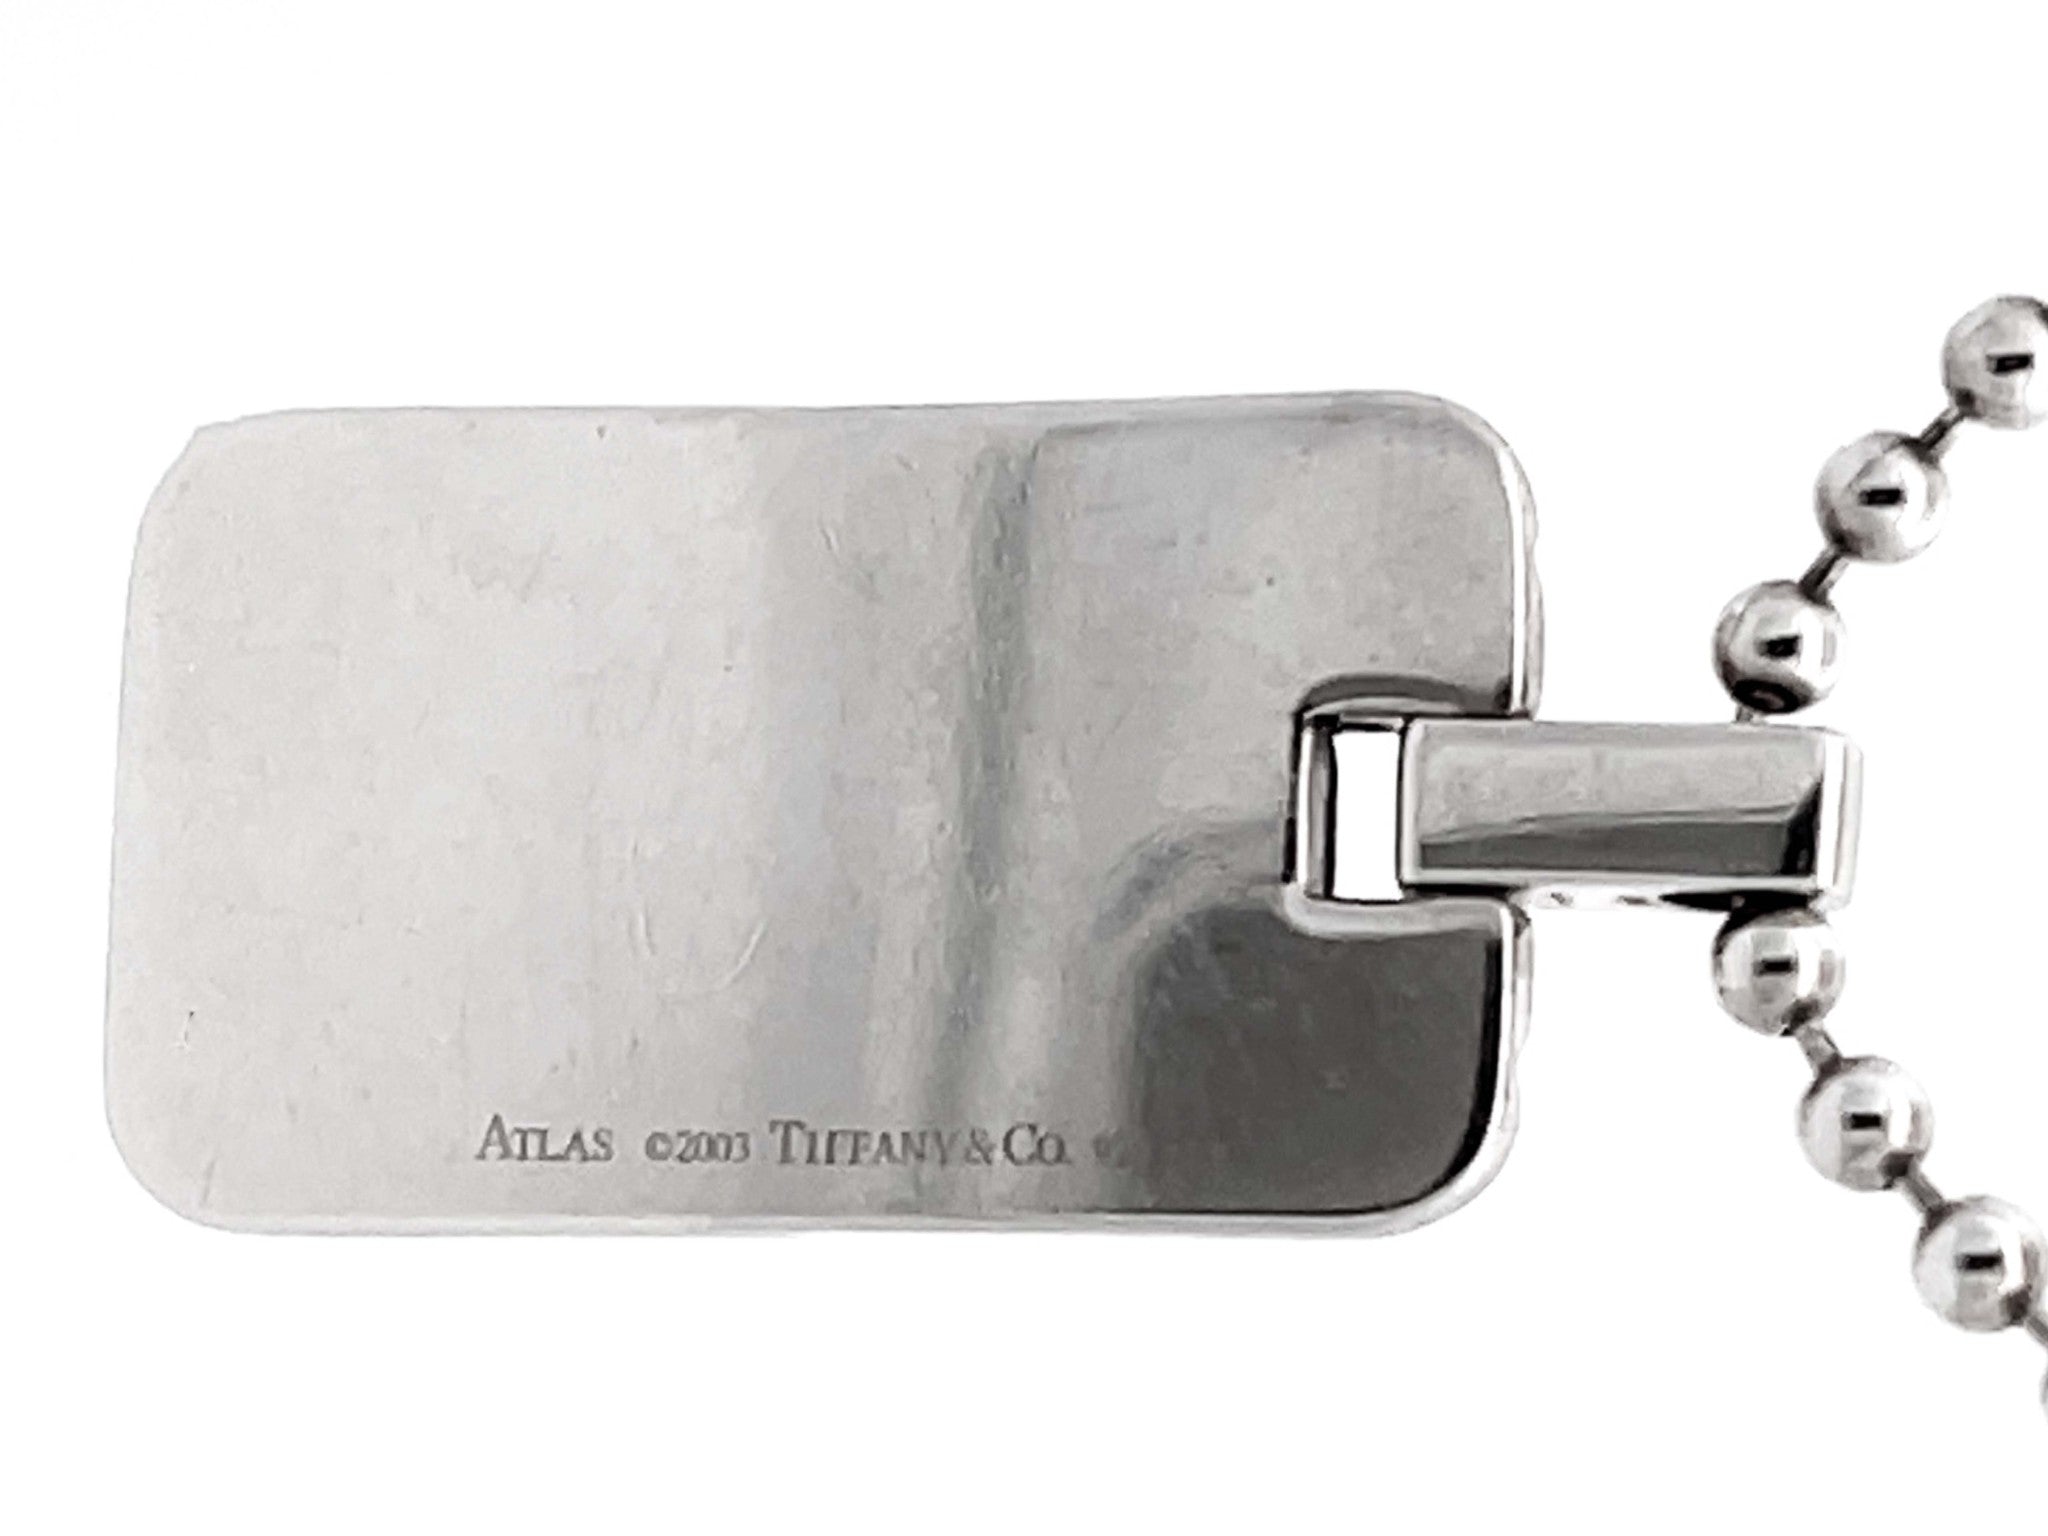 Tiffany & Co. Atlas Necklace in Sterling Silver